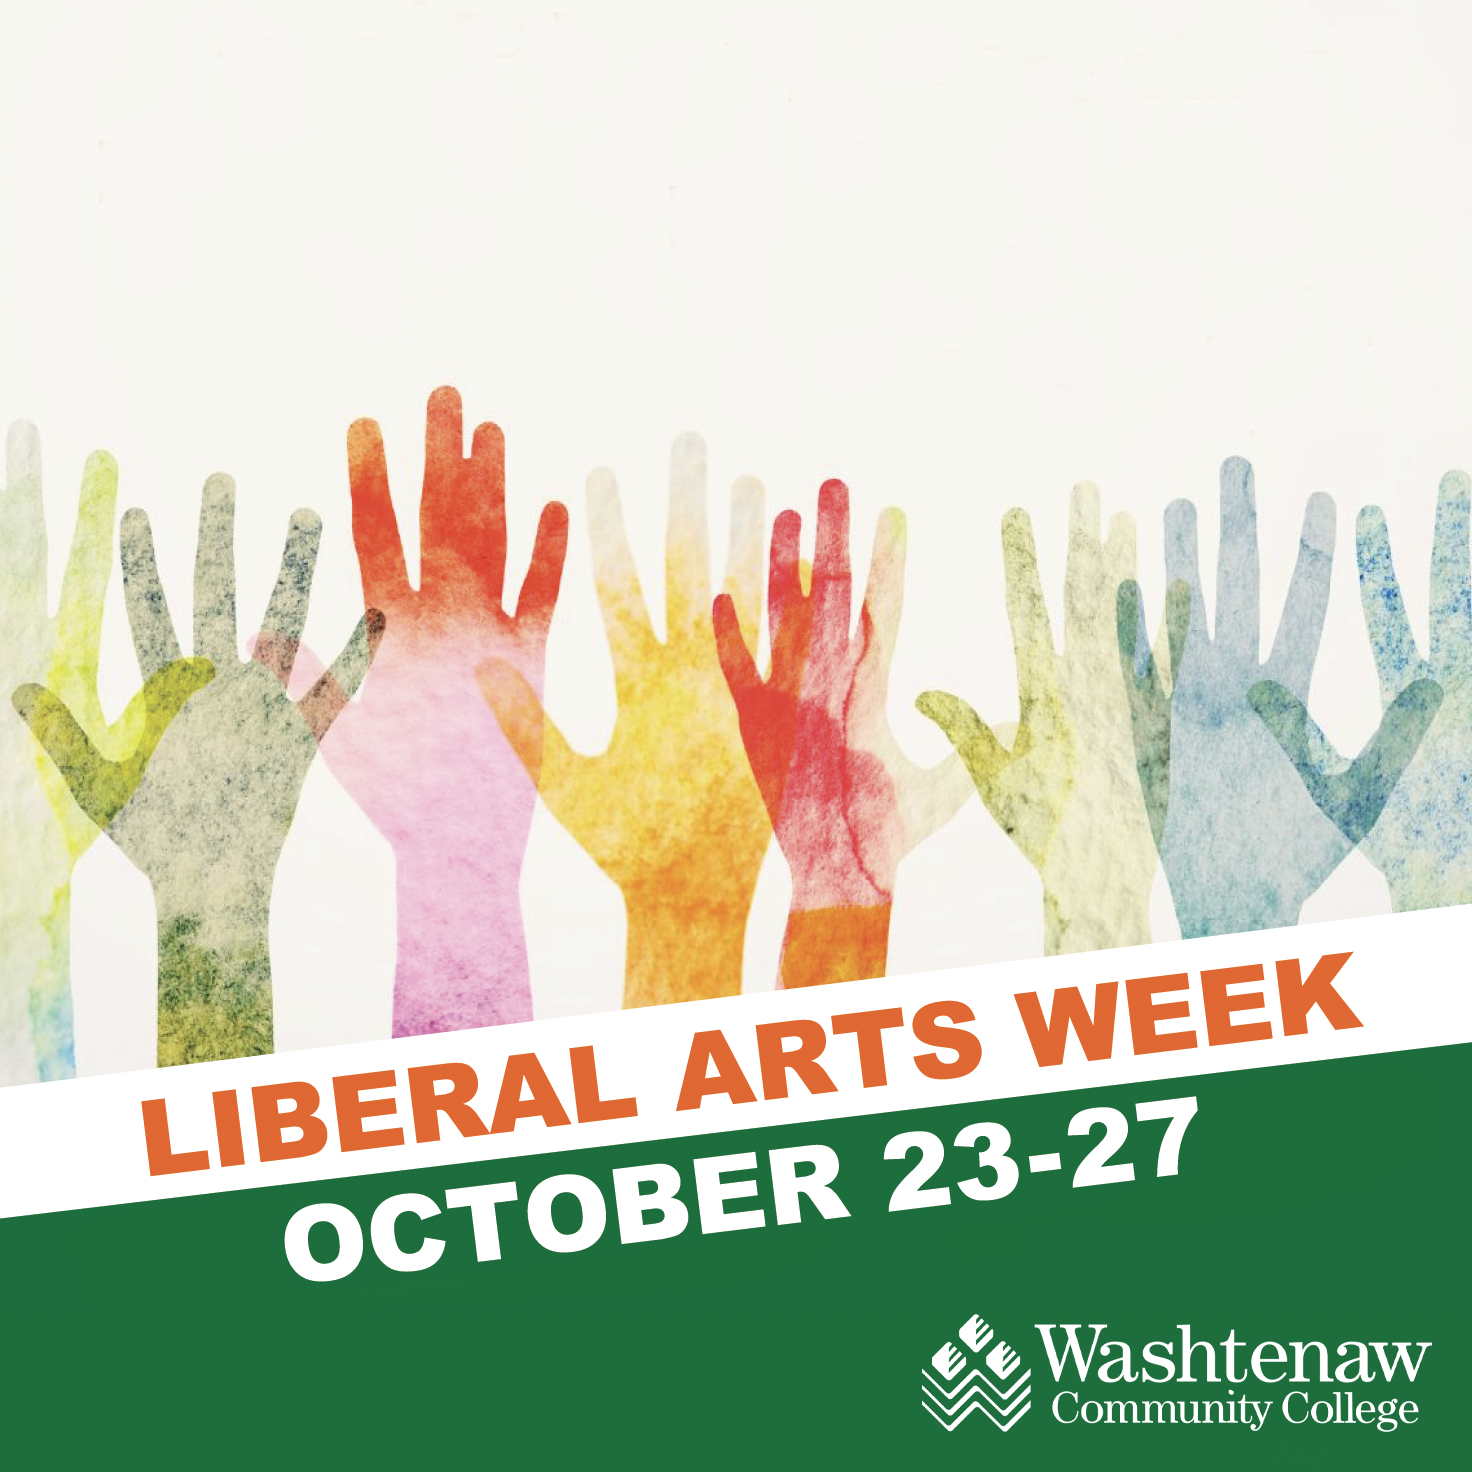 Liberal Arts Week